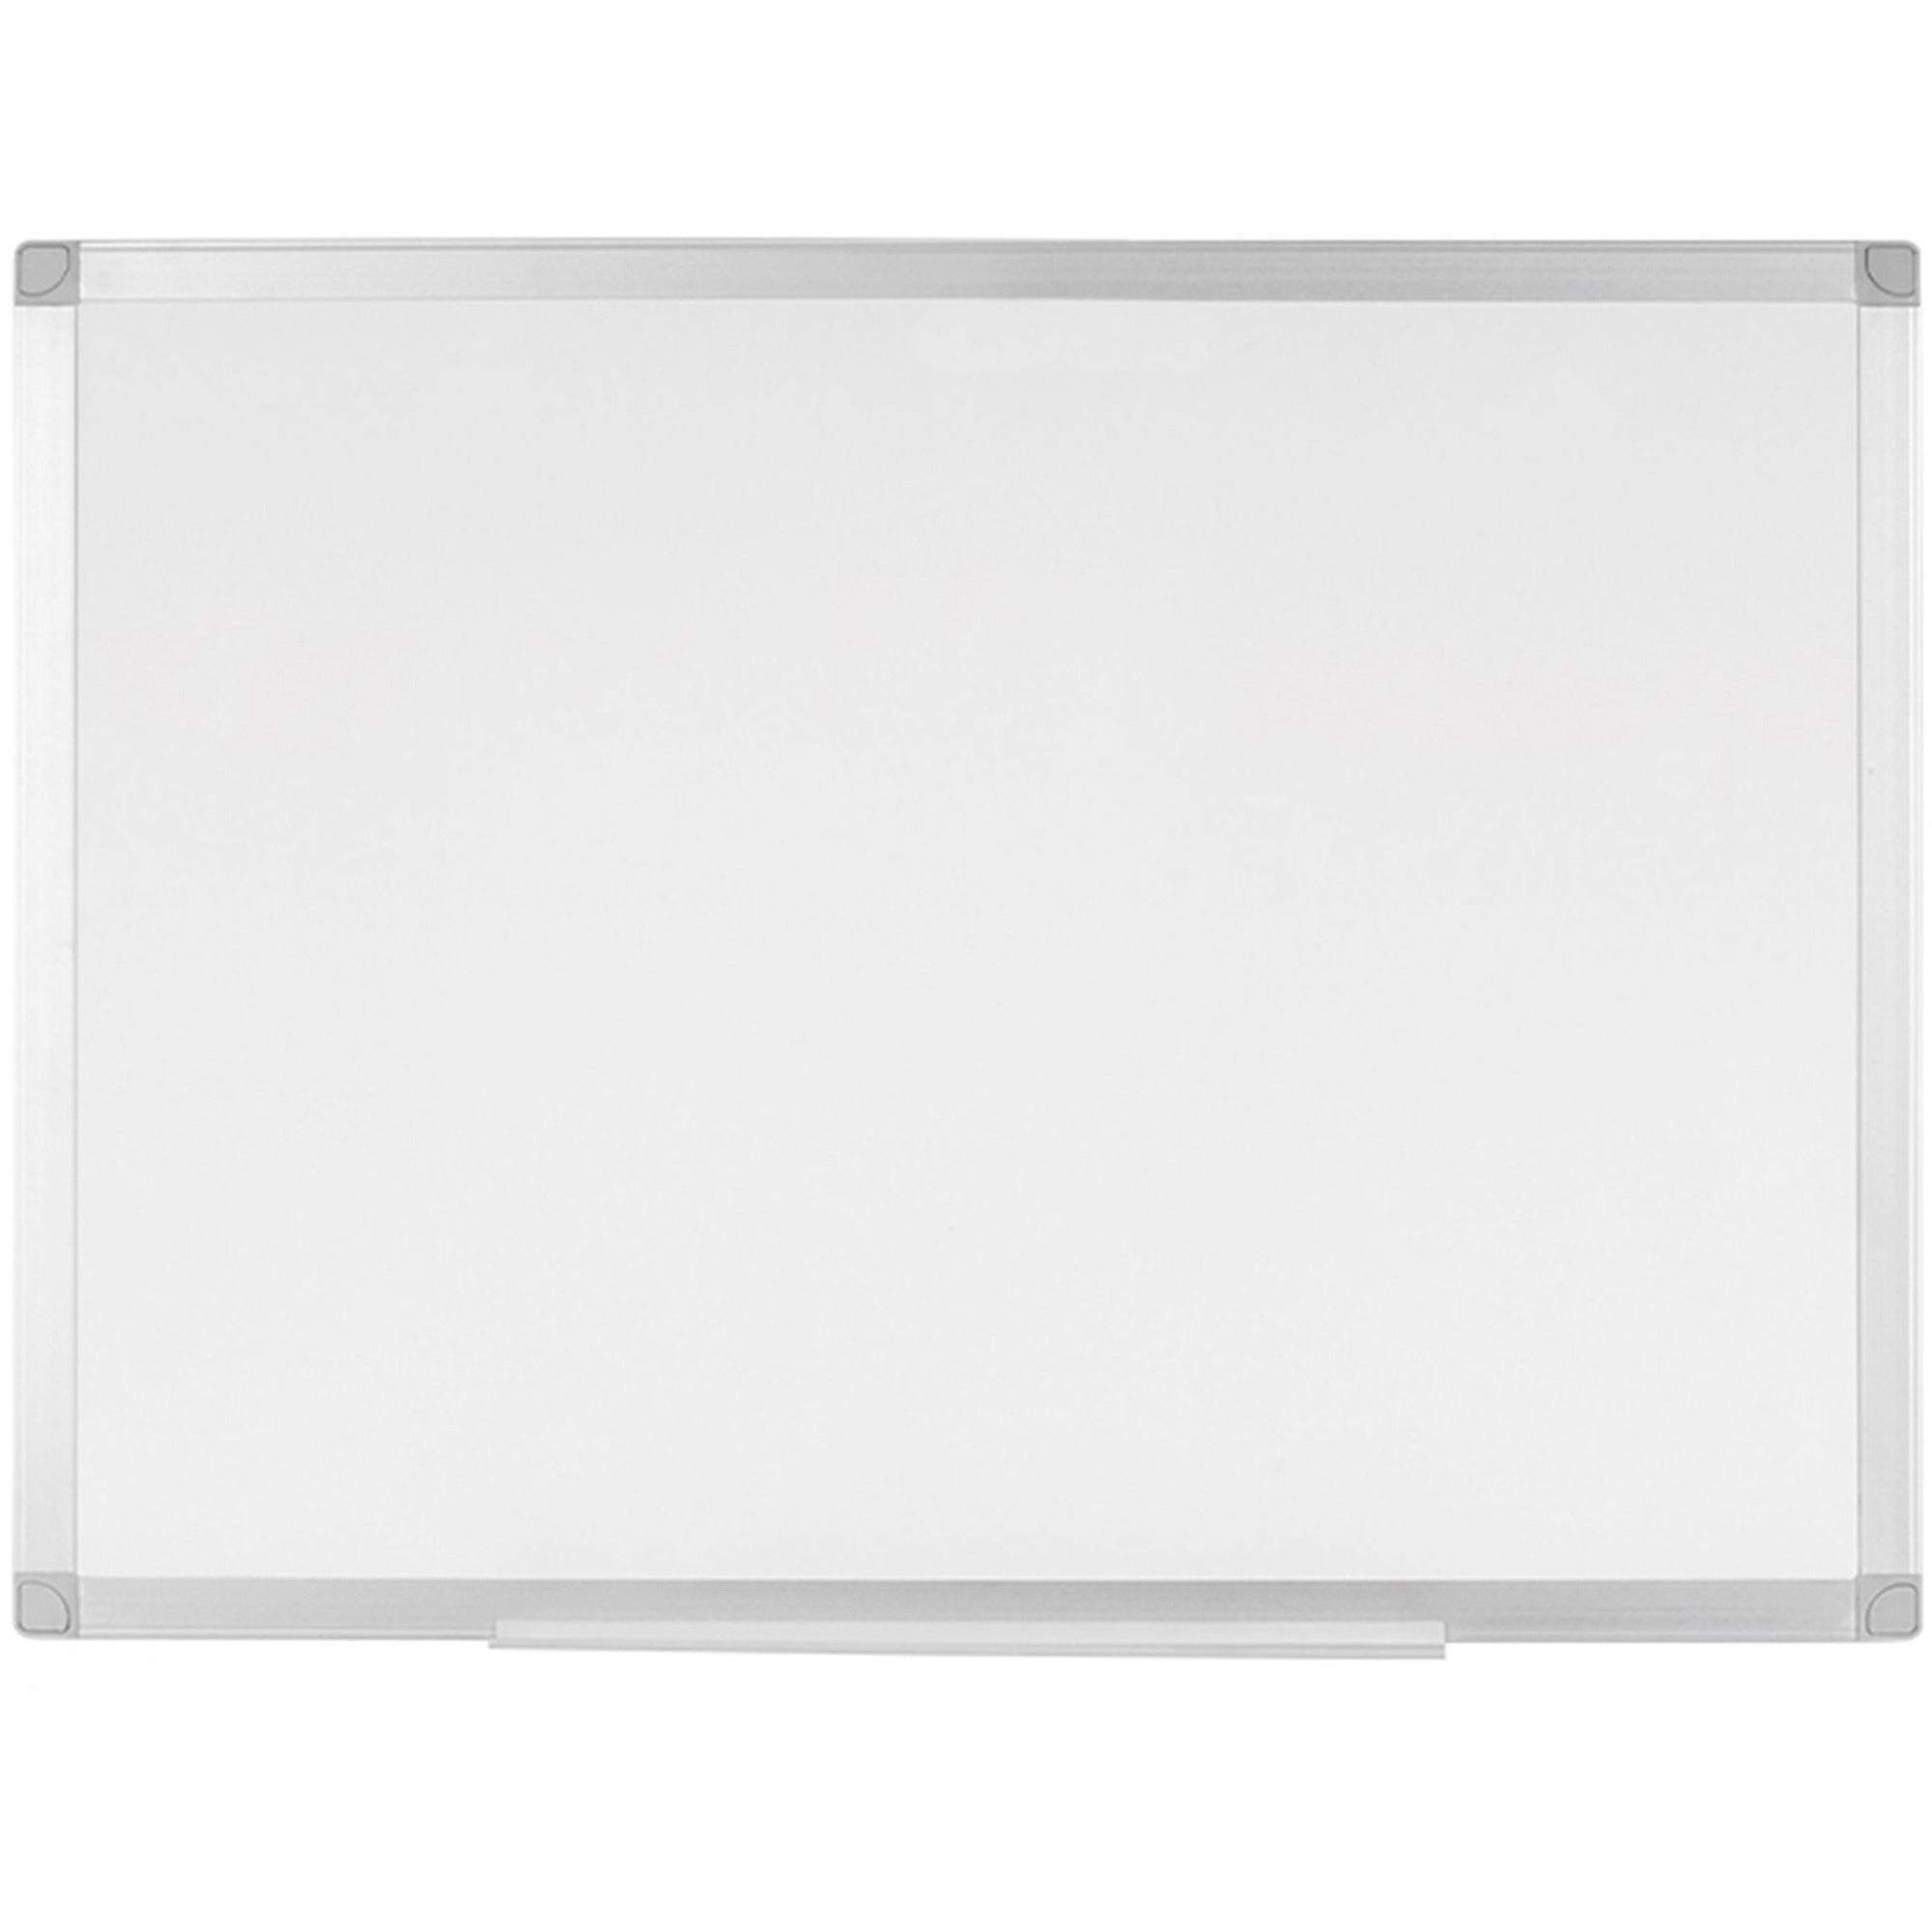 bi-silque-ayda-porcelain-dry-erase-board-36-3-ft-width-x-24-2-ft-height-white-porcelain-surface-aluminum-frame-rectangle-horizontal-vertical-magnetic-1-each_bvccr06999214 - 1